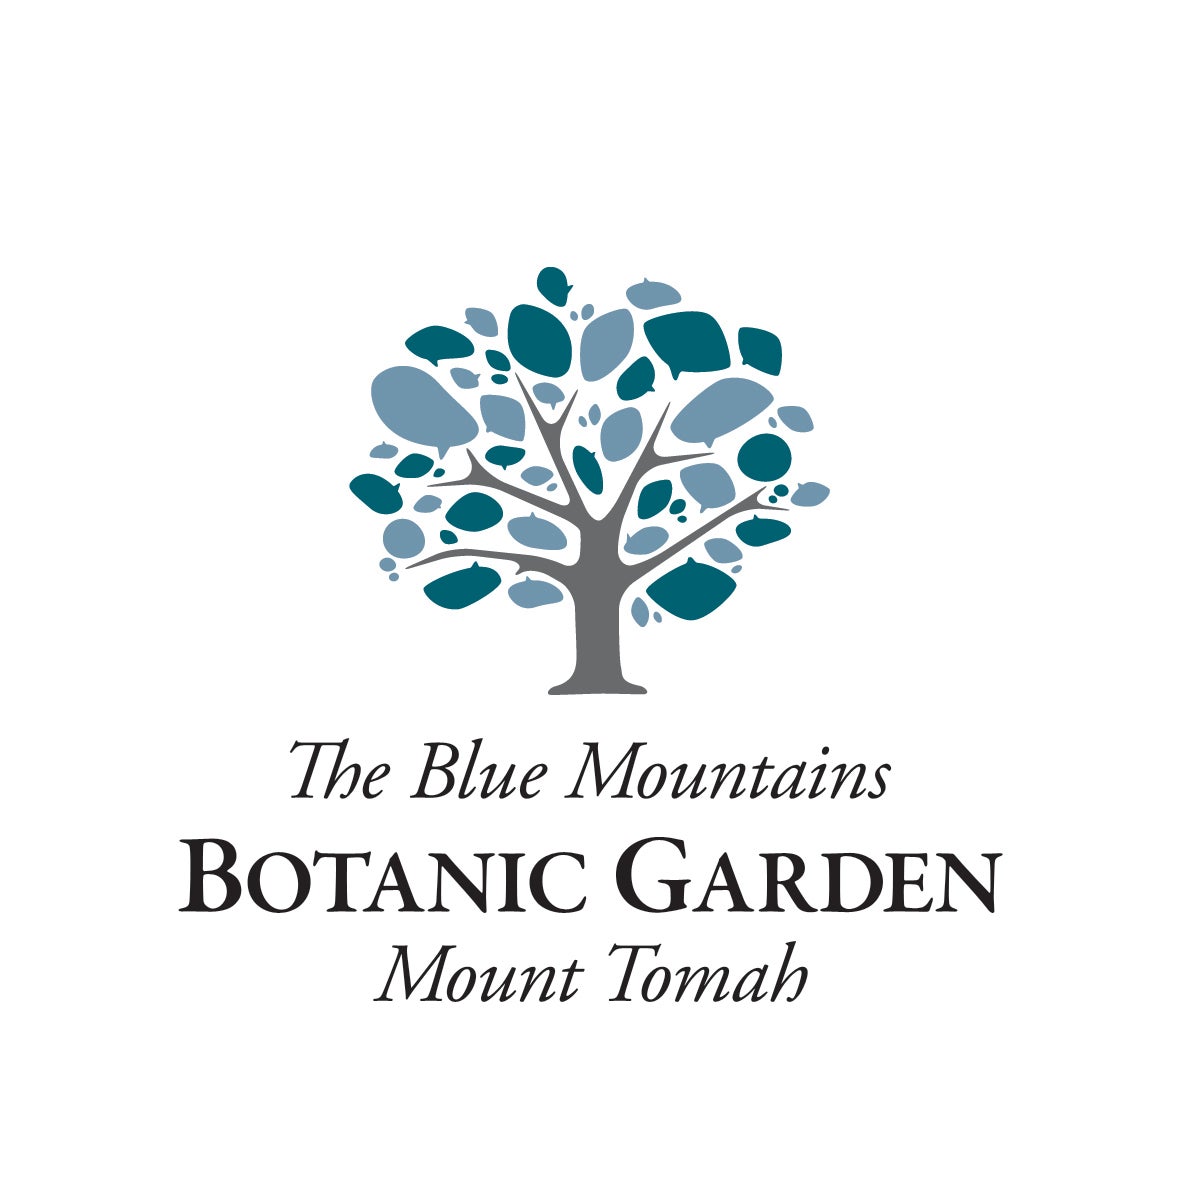 The Blue Mountains Botanic Garden